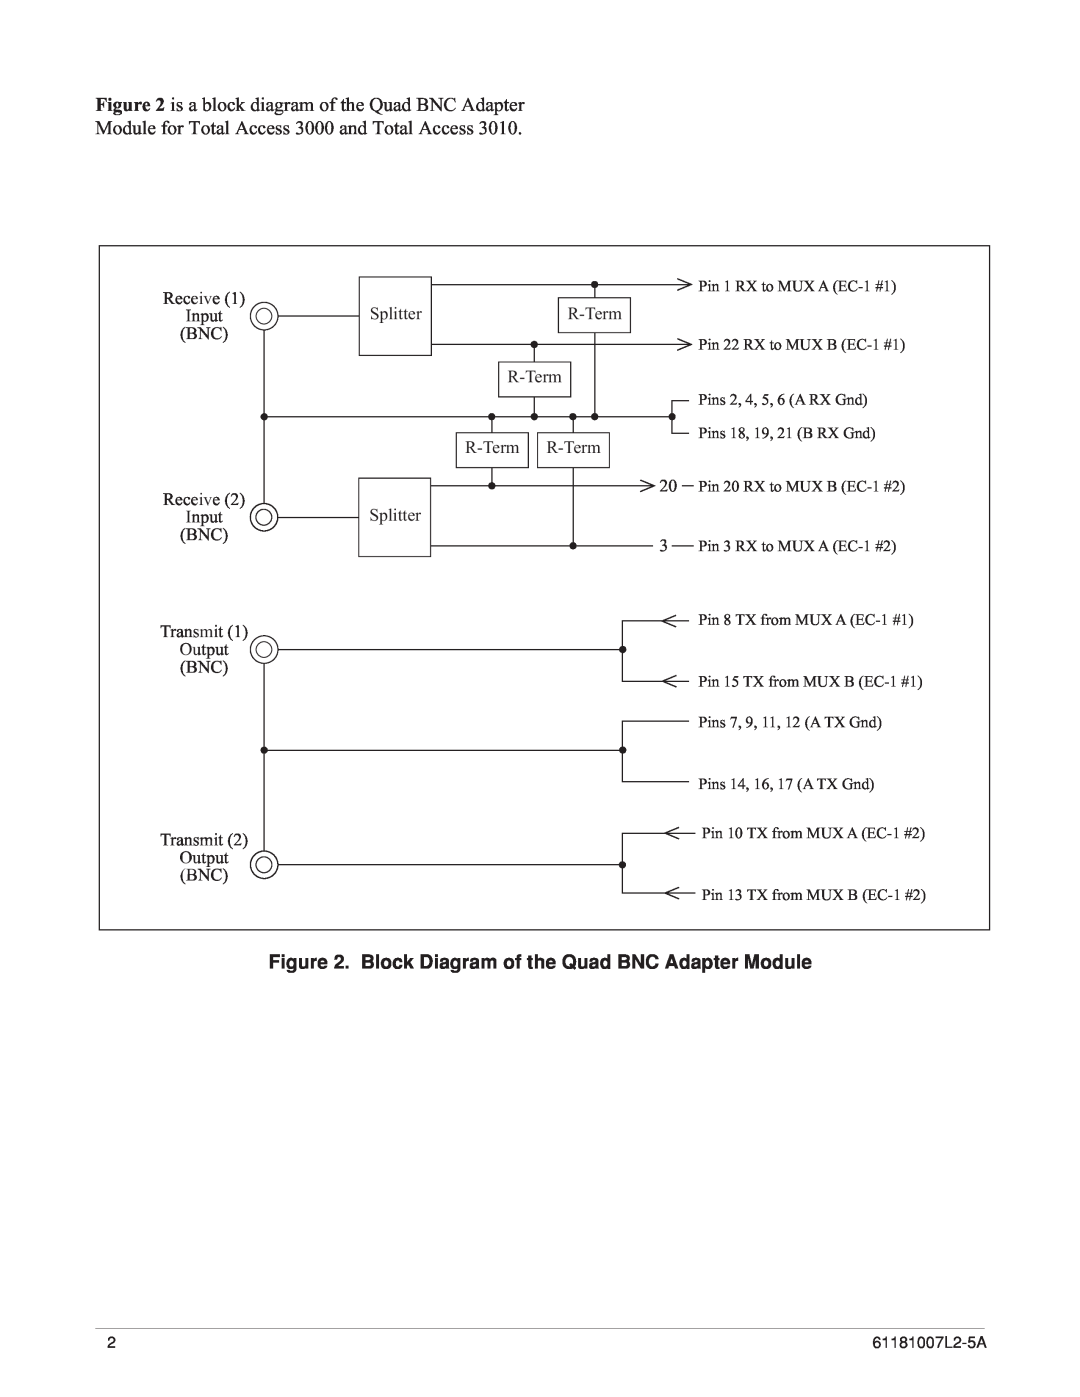 ADTRAN Block Diagram of the Quad BNC Adapter Module, Receive Input BNC, Splitter, R-Term R-Term R-Term 